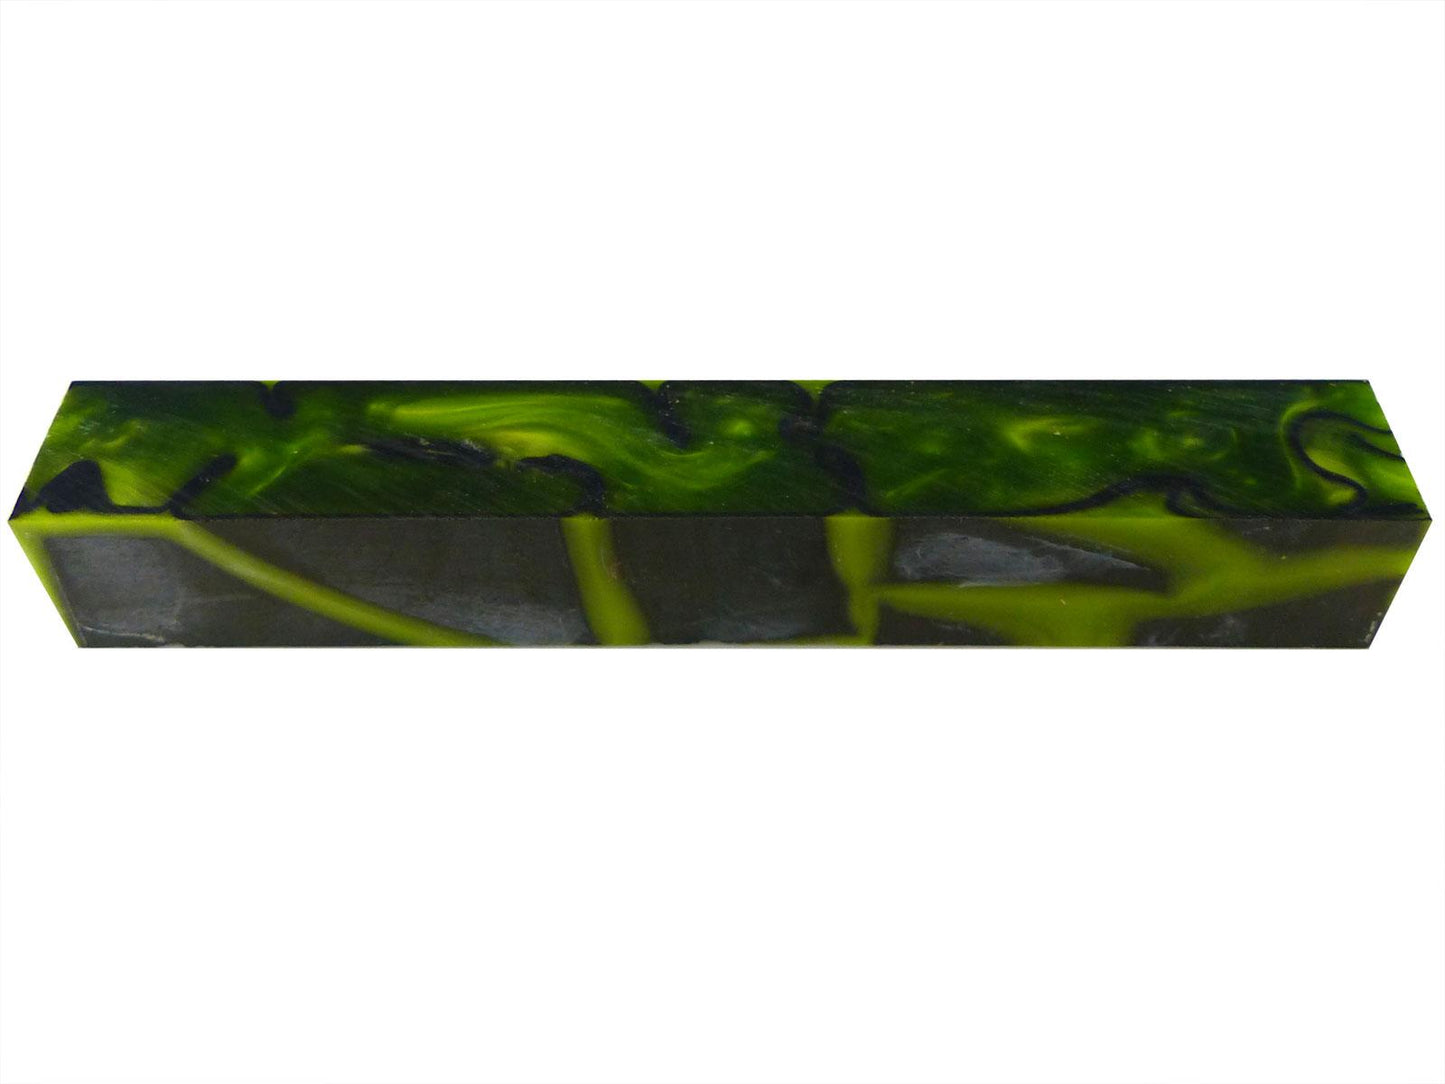 Turners' Mill Toxic Green/Black Abstract Kirinite Acrylic Pen Blank - 150x20x20mm (5.9x0.79x0.79"), 6x3/4x3/4"